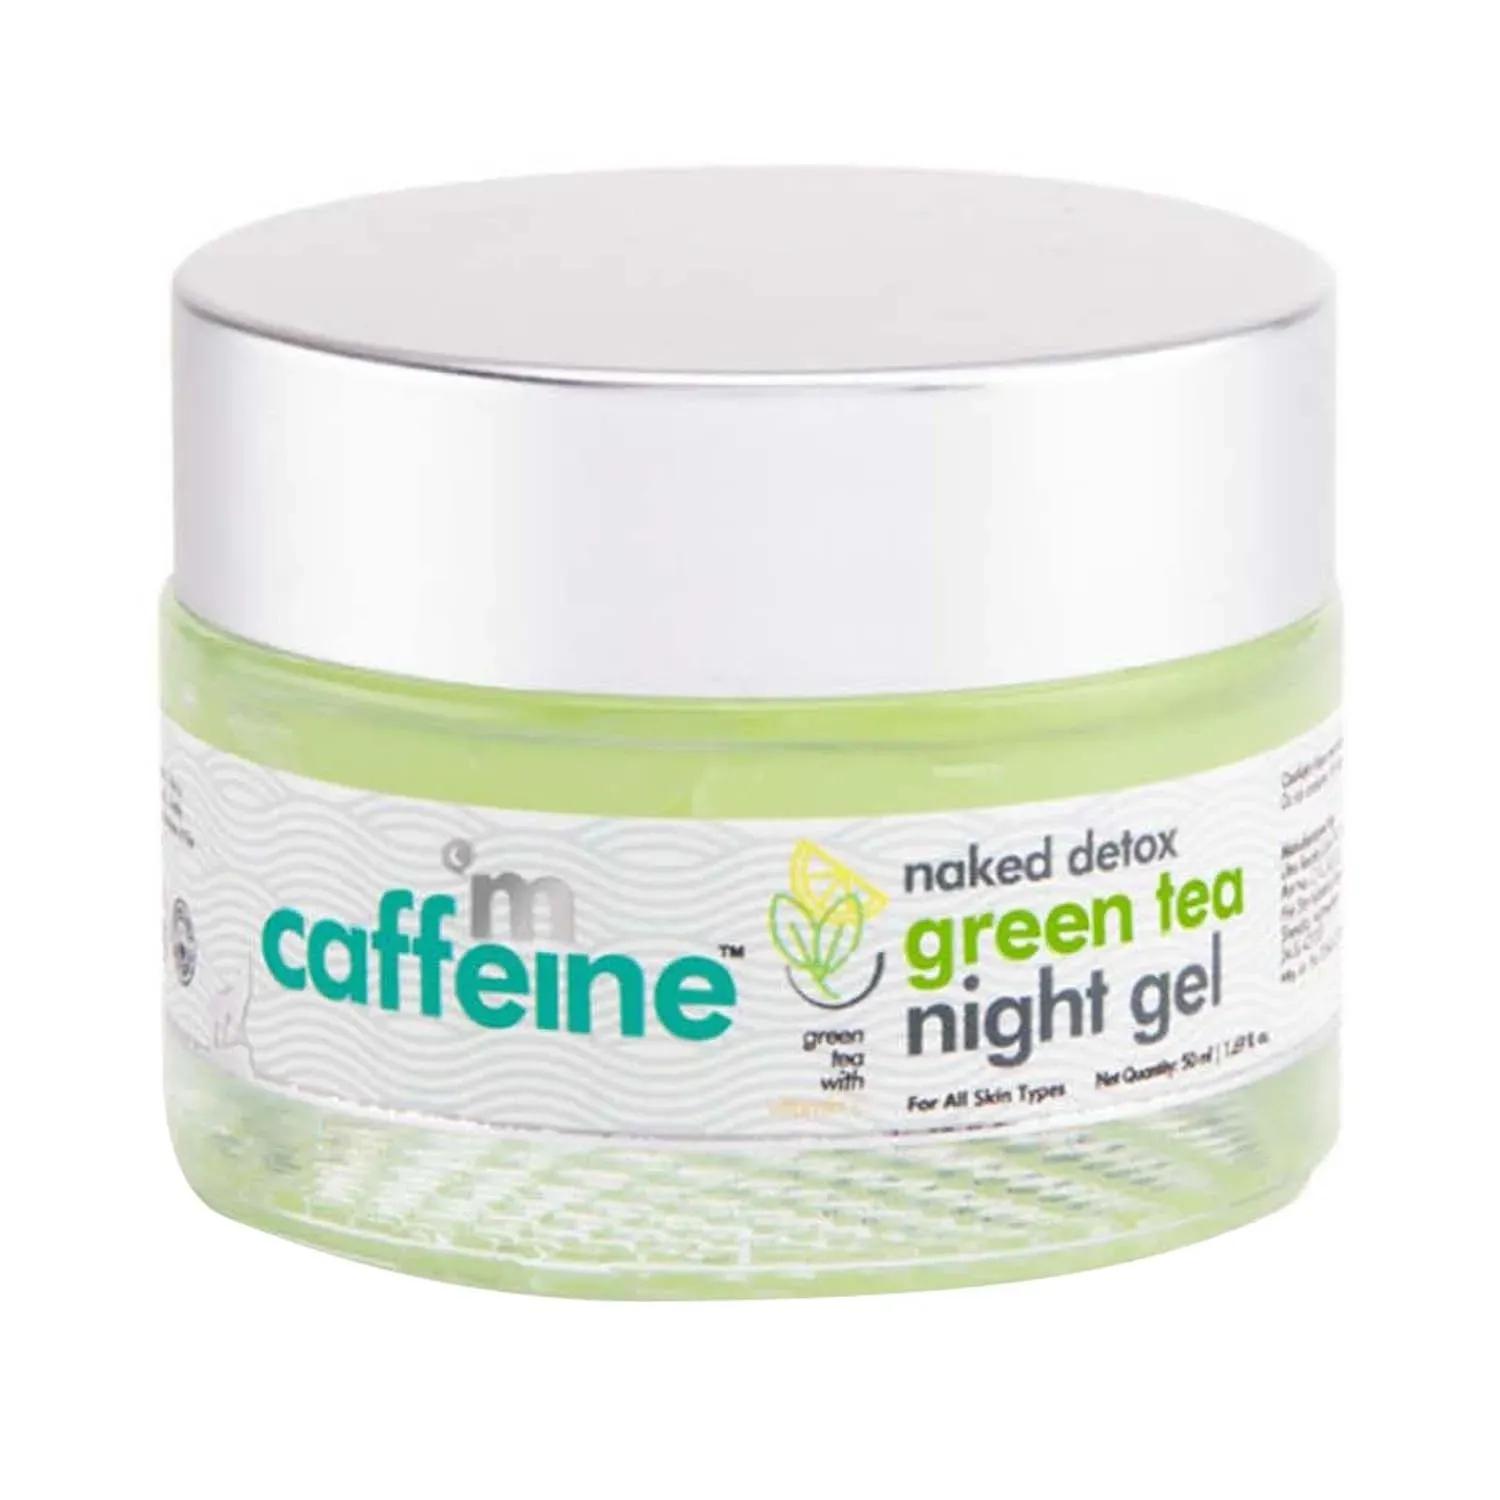 mcaffeine naked detox hydrating green tea night gel - (50ml)